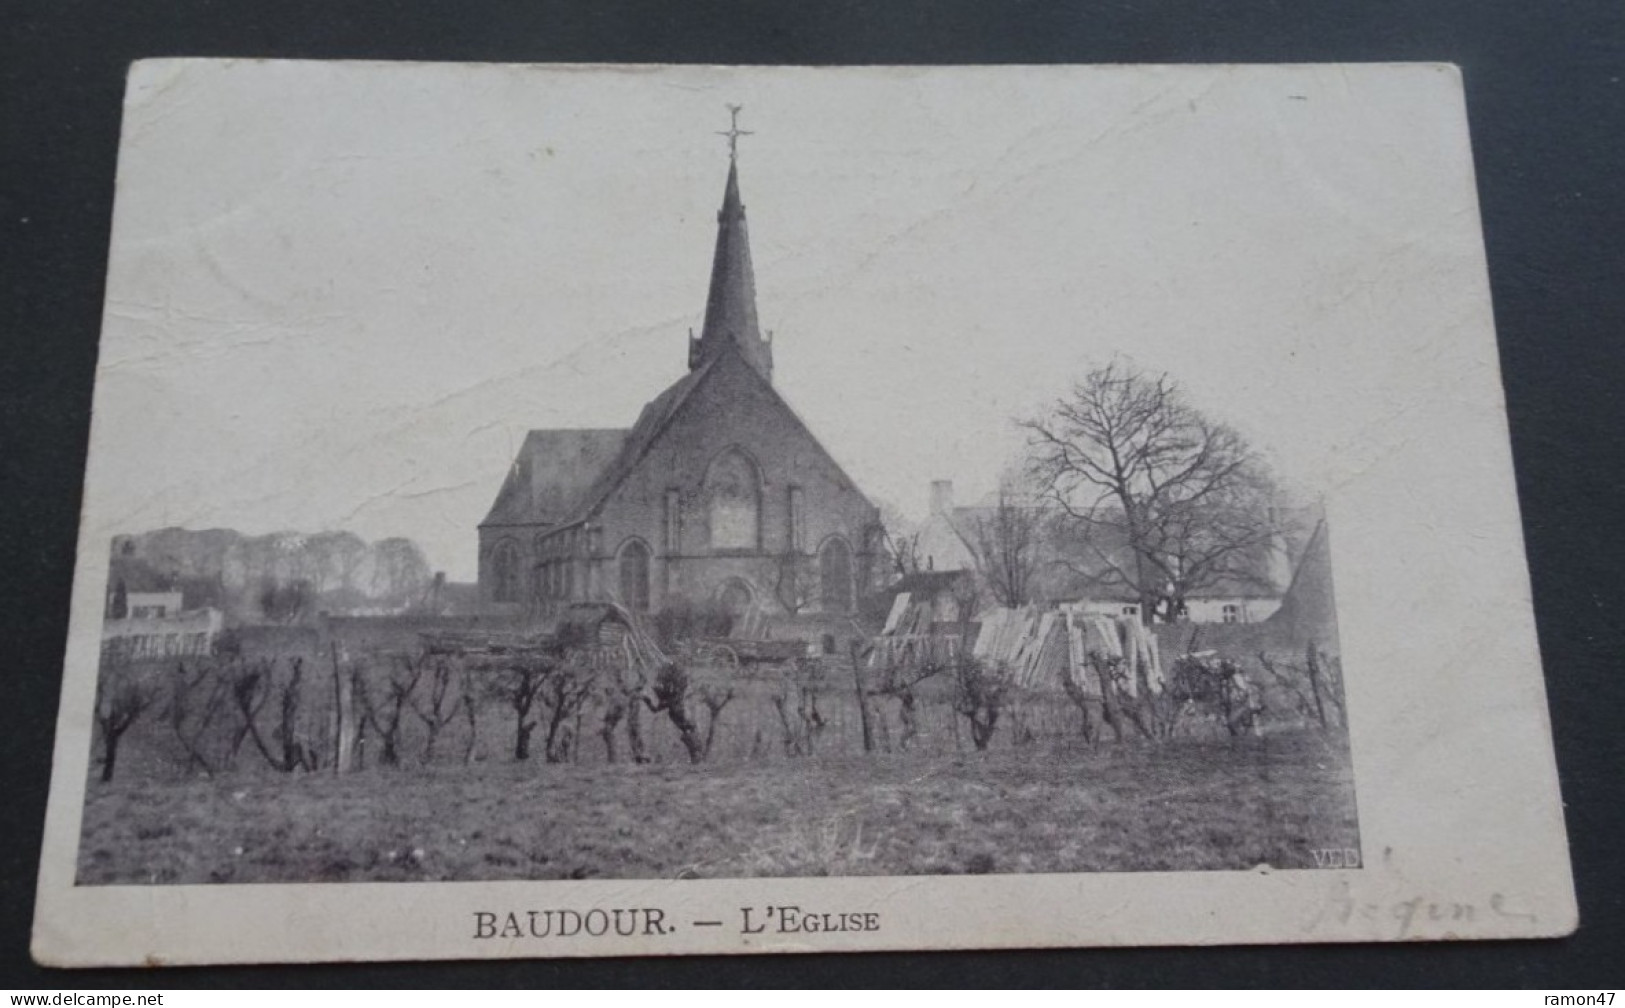 Baudour - L'Eglise - Saint-Ghislain